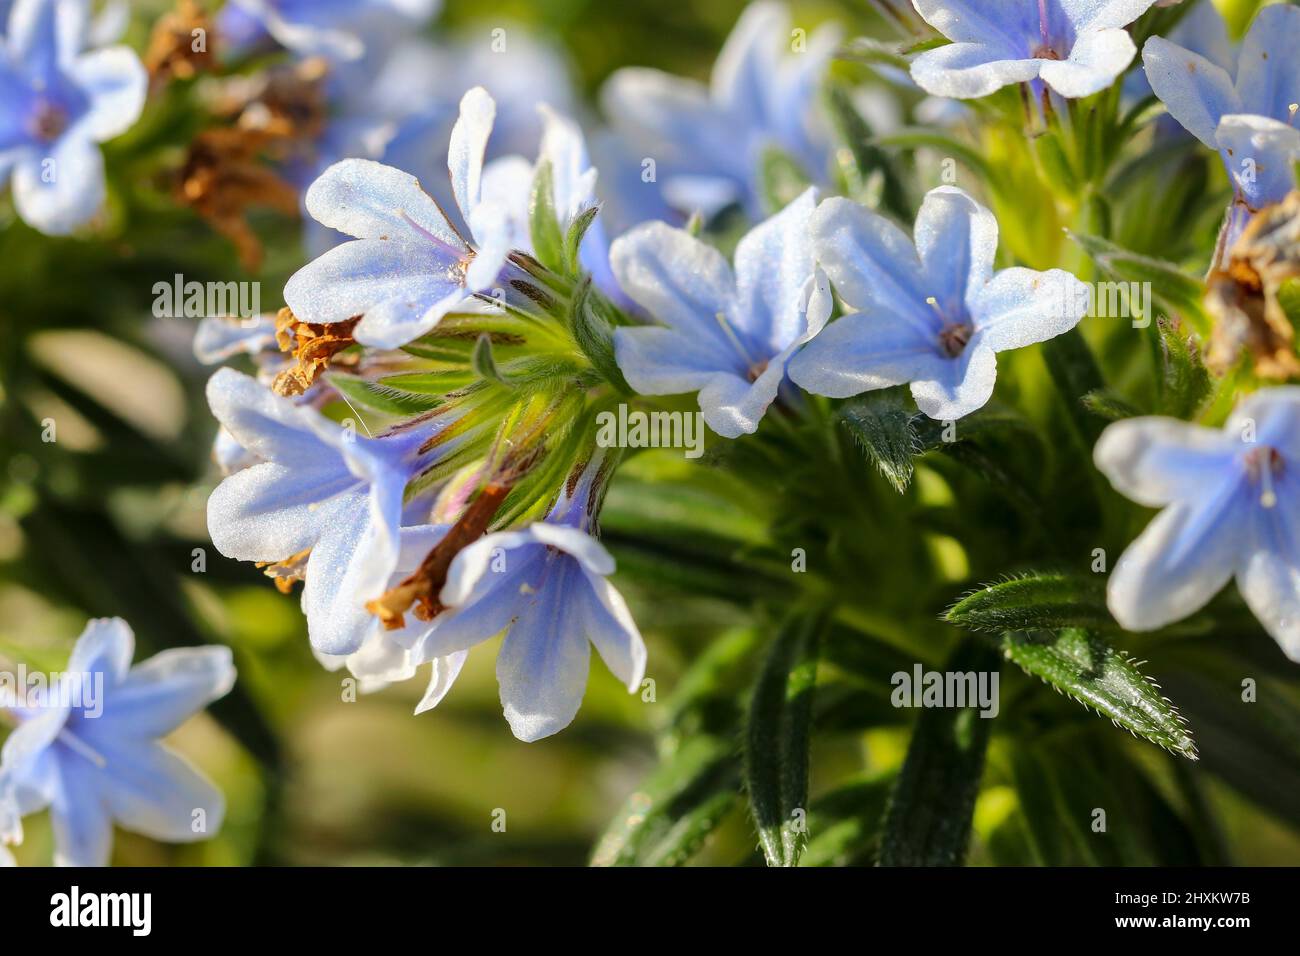 Zahn's gromwell 'Lithodora zahnii' evergreen shrub with blue flowers petals blooming during Spring. Dublin, Ireland Stock Photo